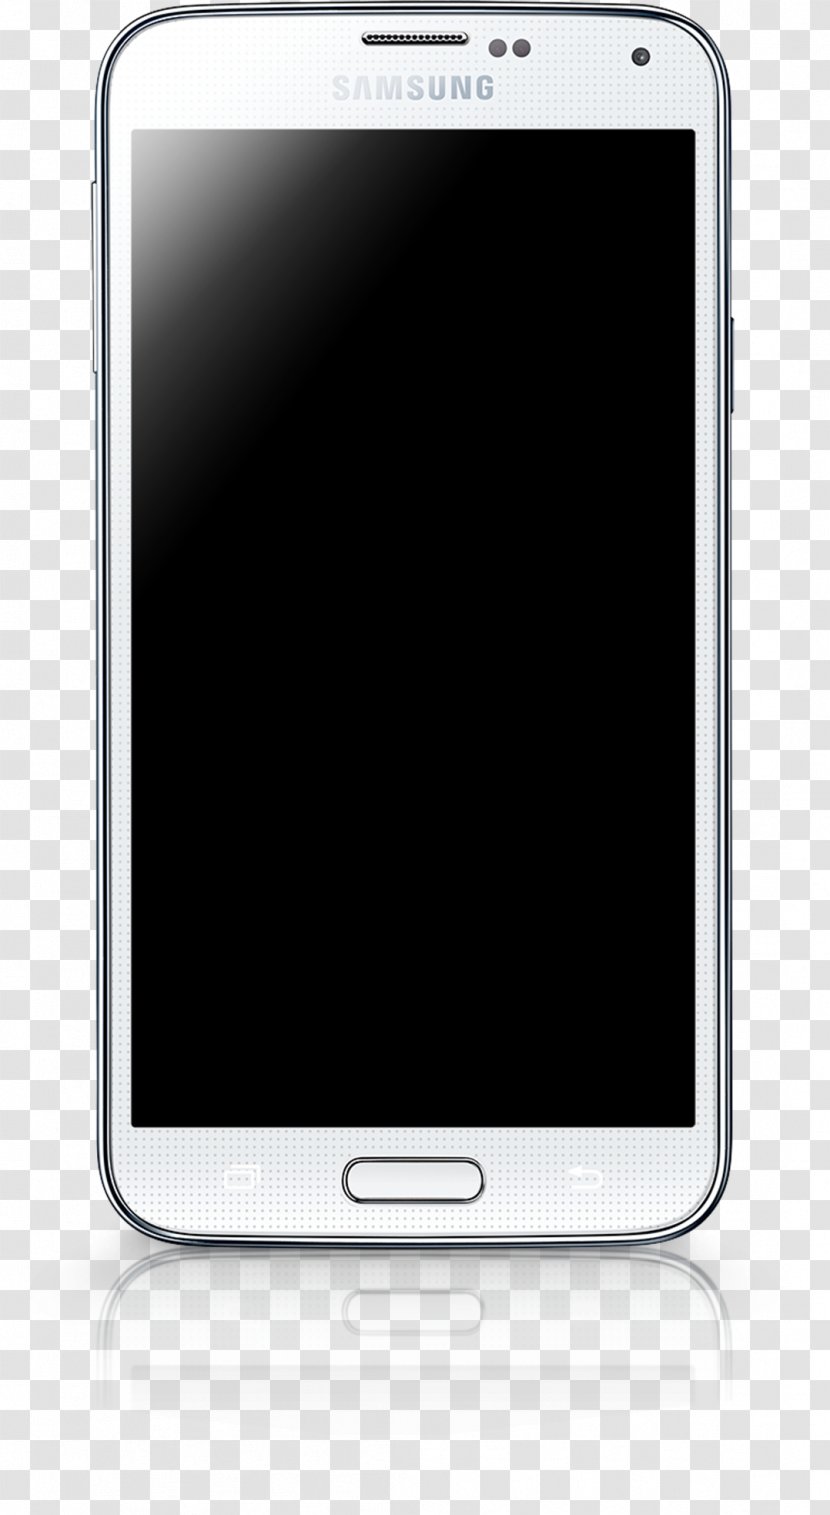 Samsung Galaxy s5 PNG